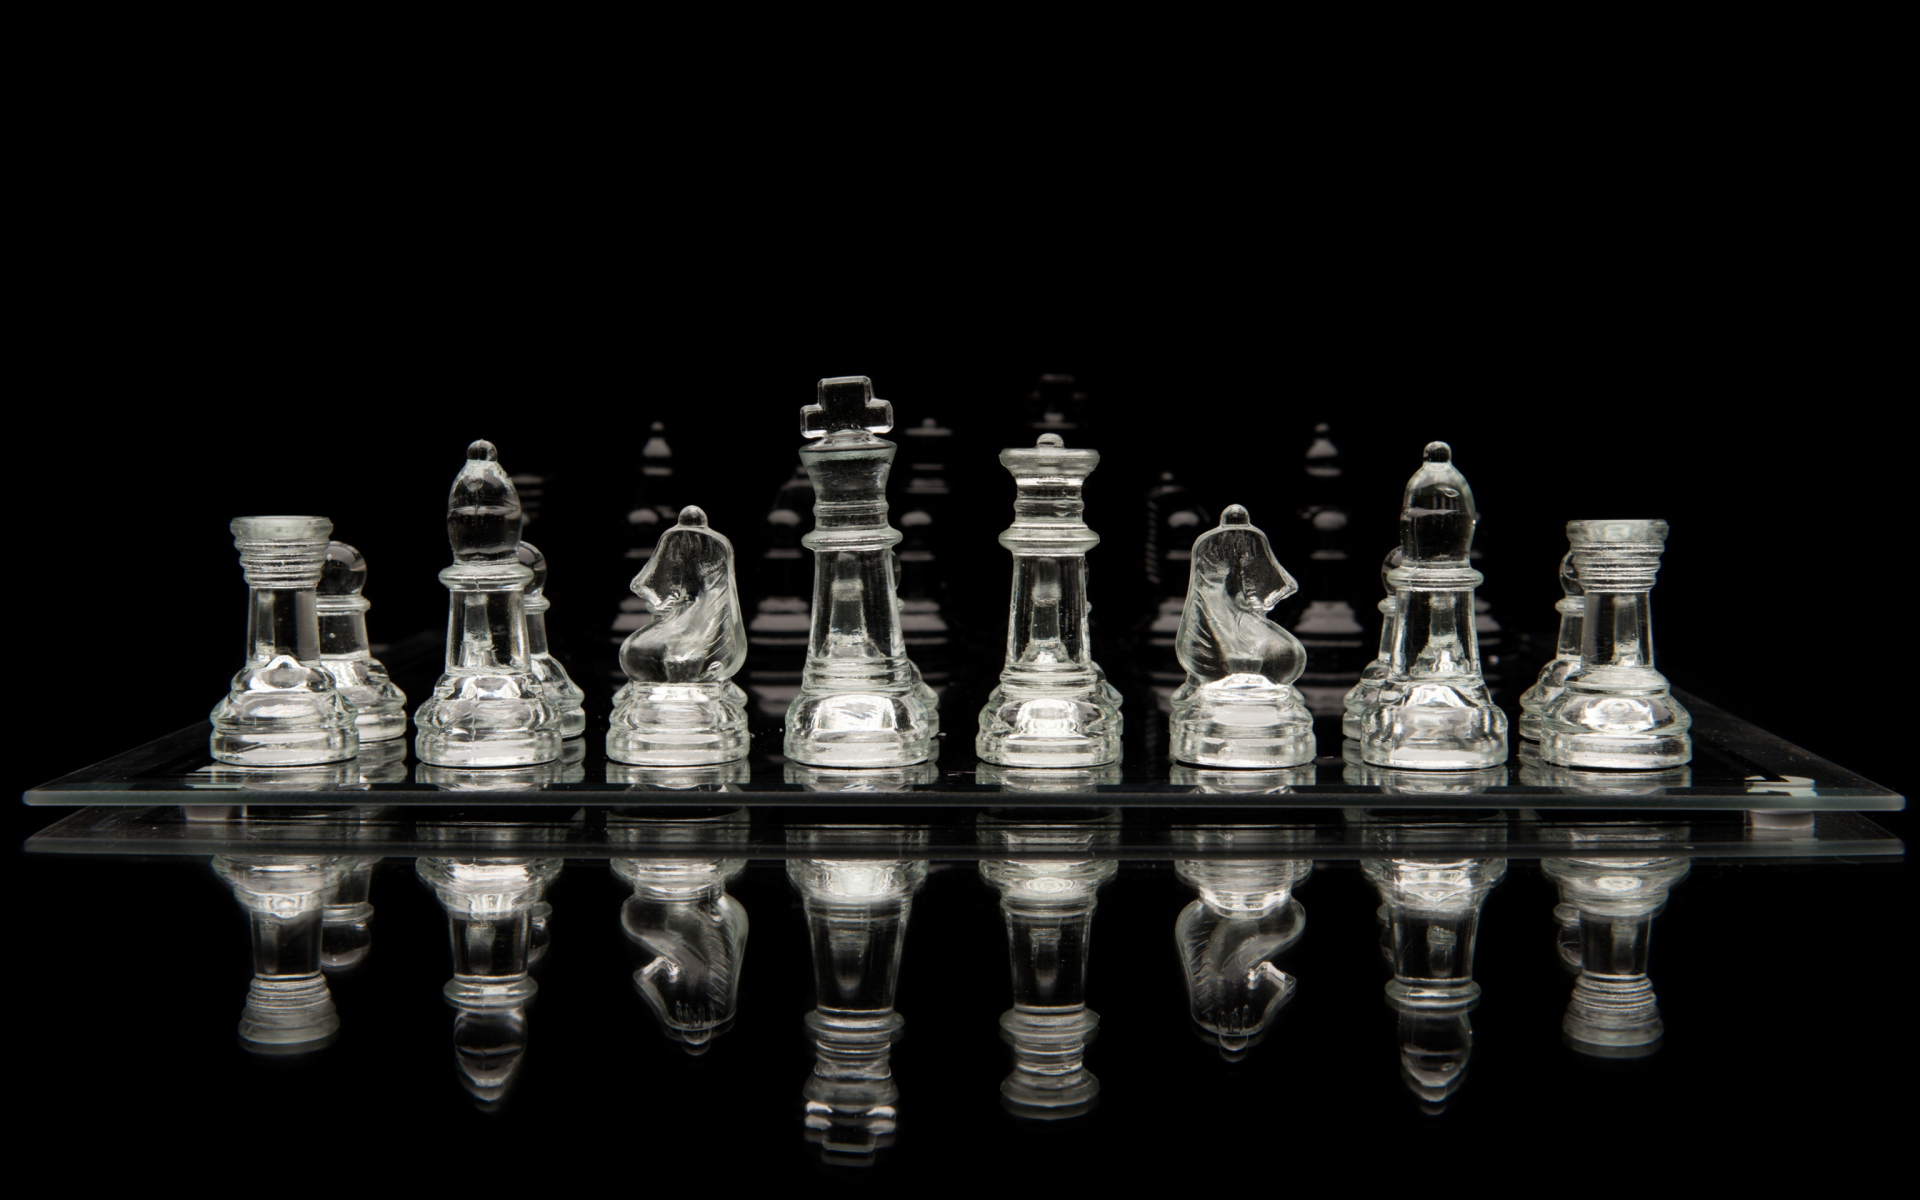 3D Chess 1080P, 2K, 4K, 5K HD wallpapers free download